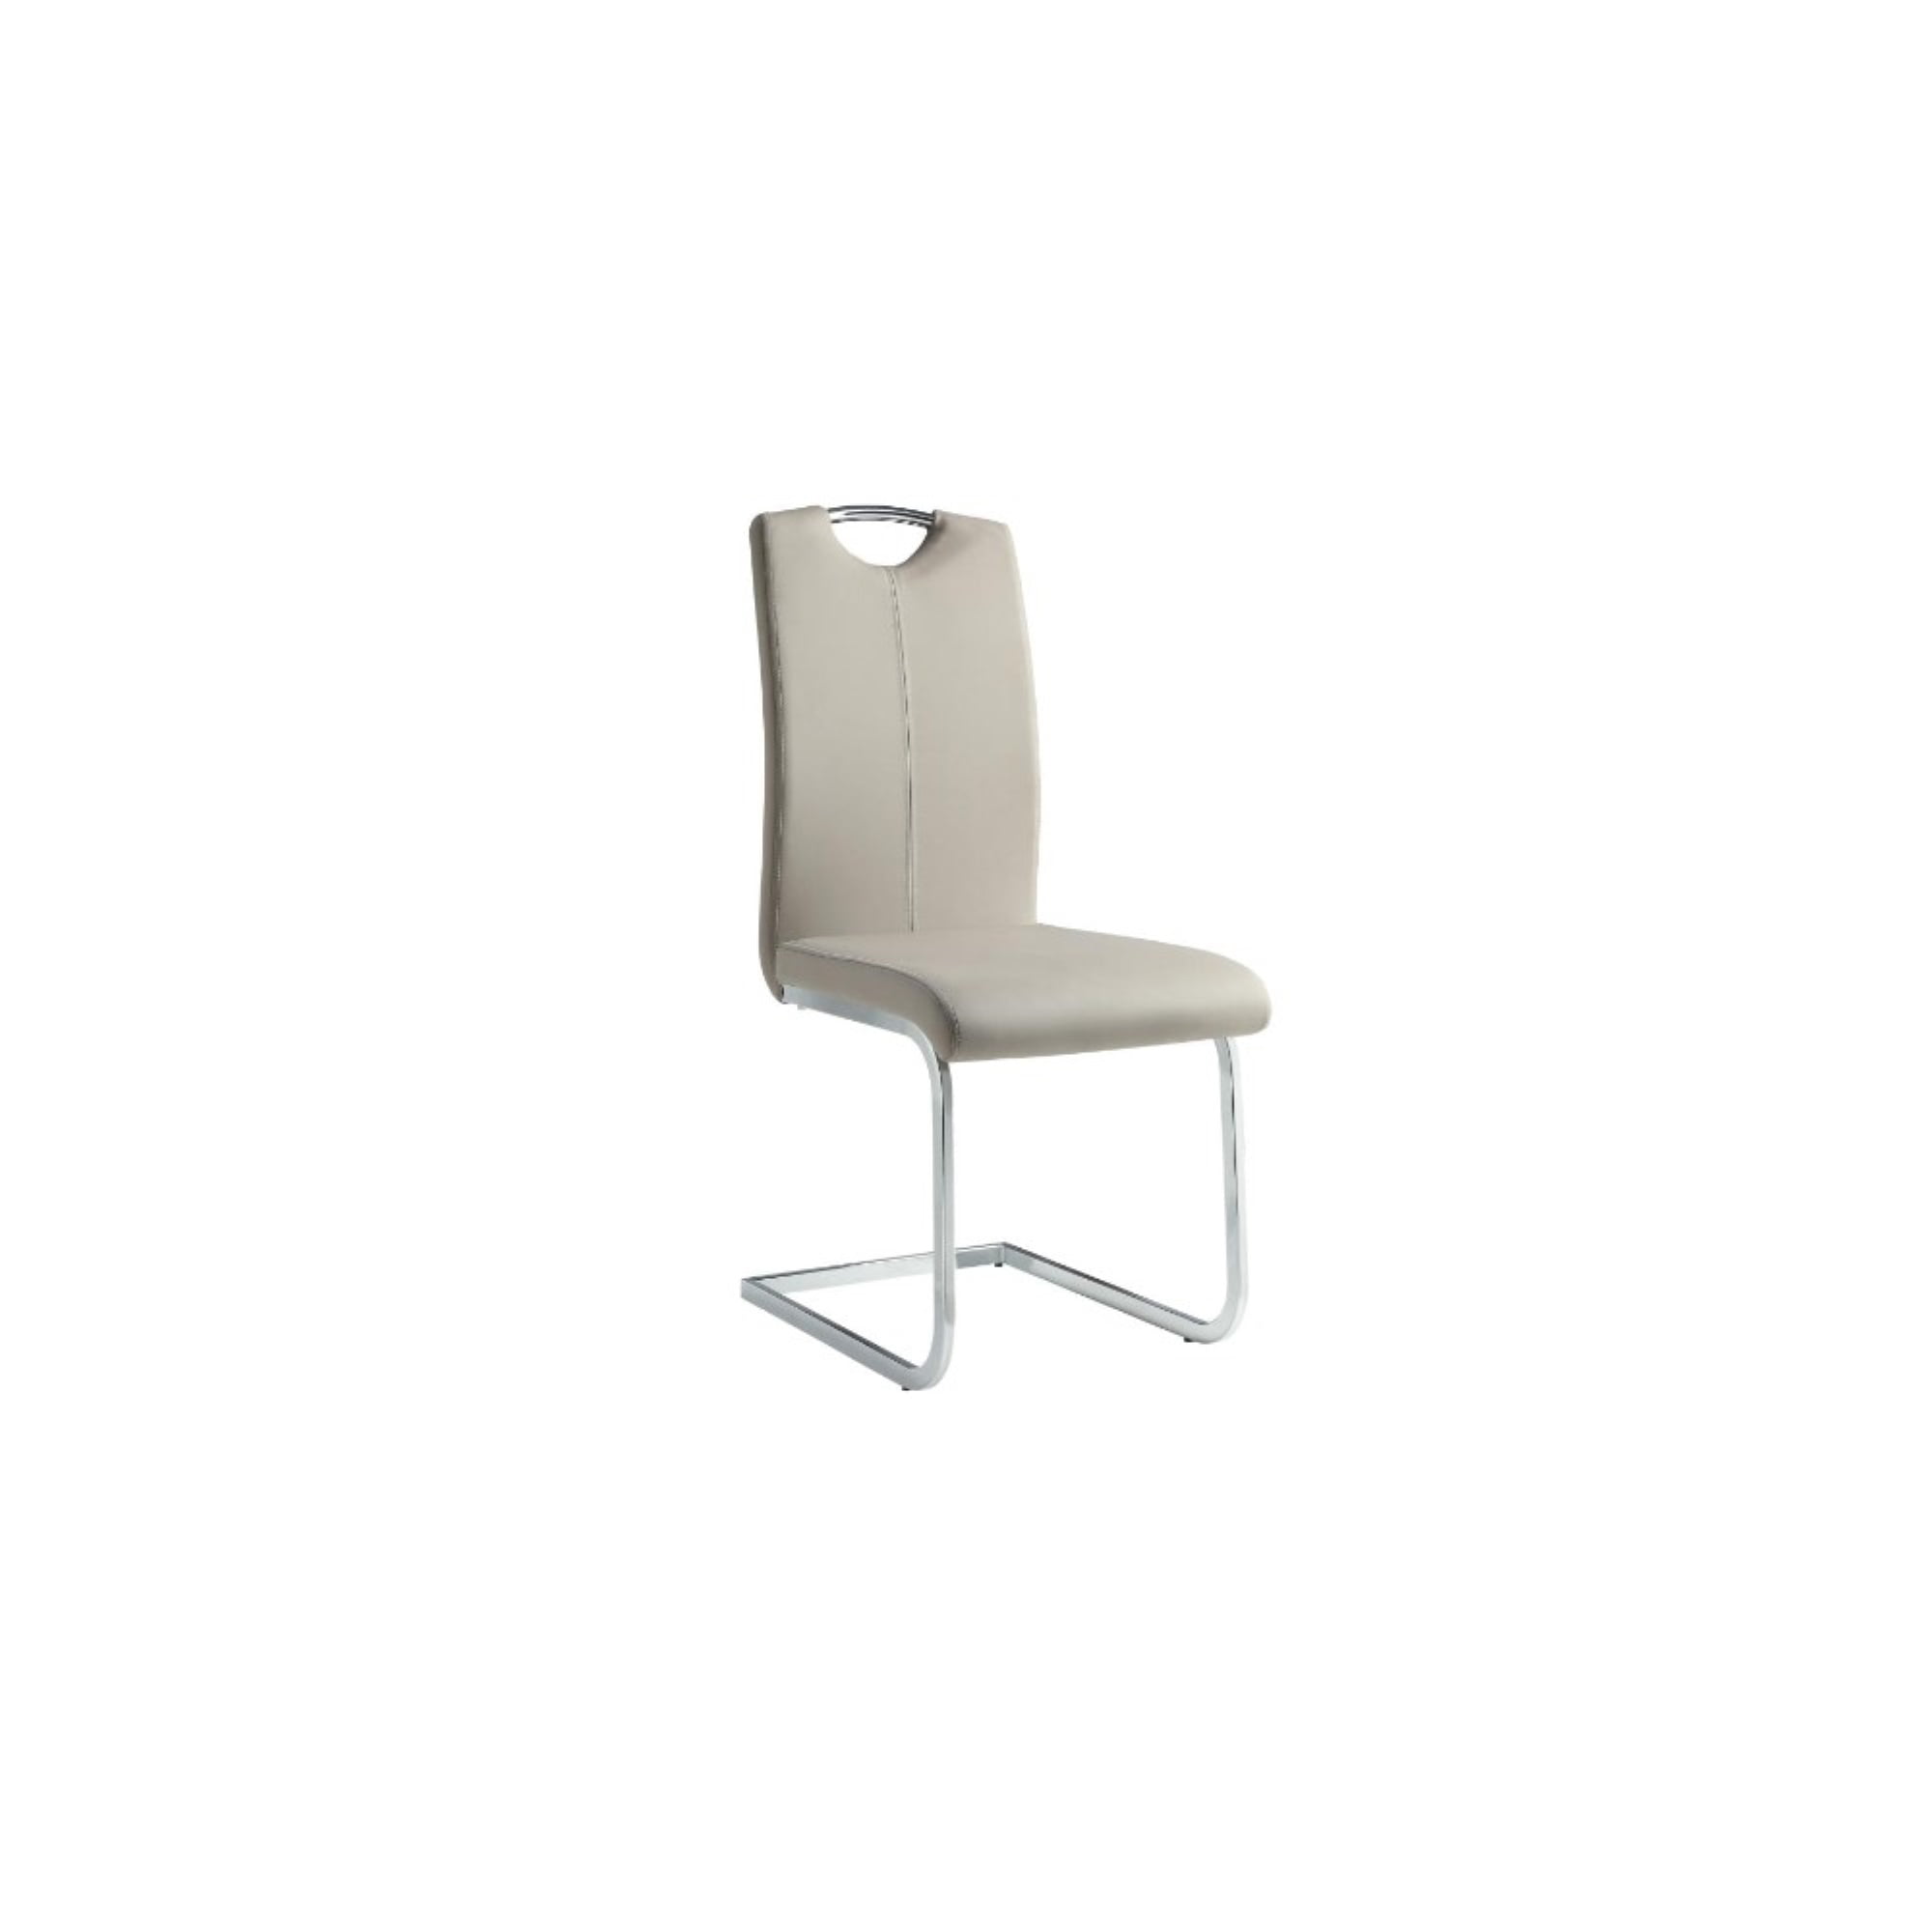 بناء مرآة الباب رسول  Metal & Leather Cantilever Style Side Chair with Chrome Base, Set of 2,  Gray - Walmart.com